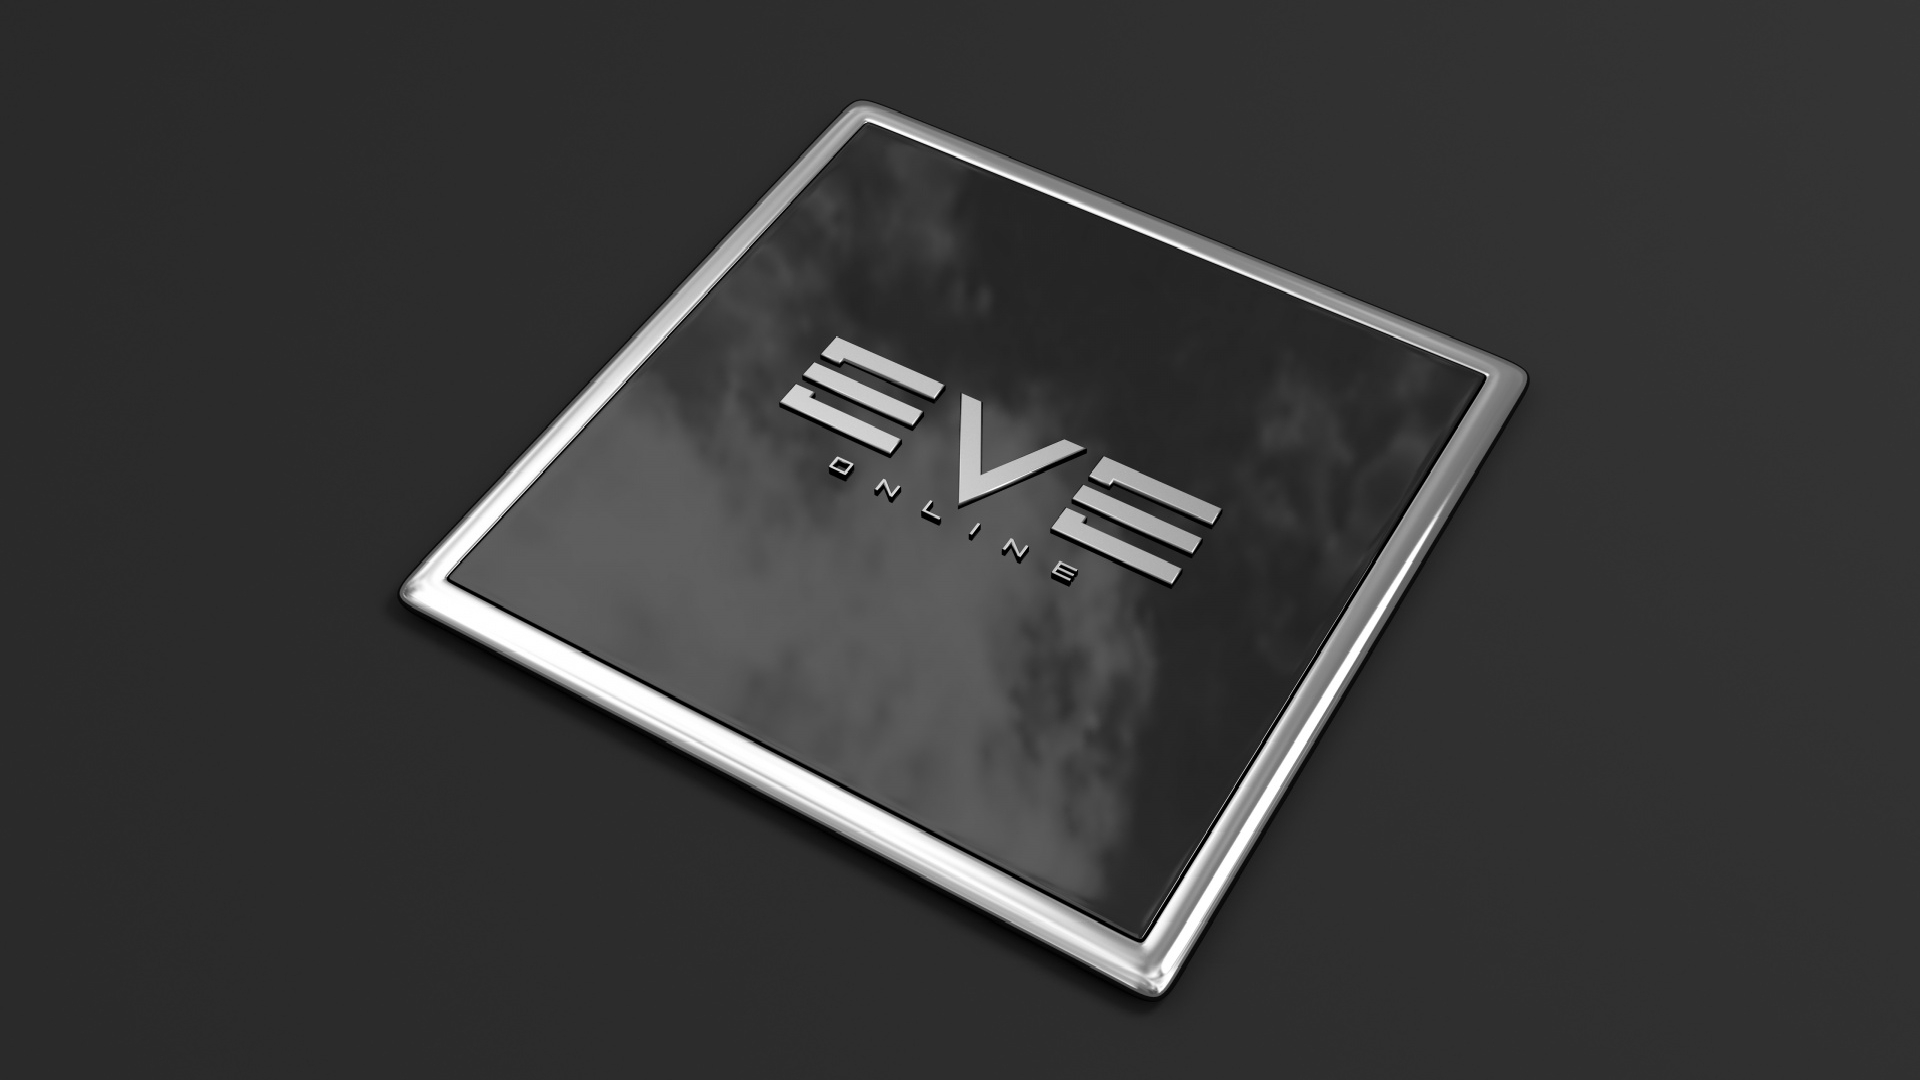 Eve Online Wallpaper Mewallpaper